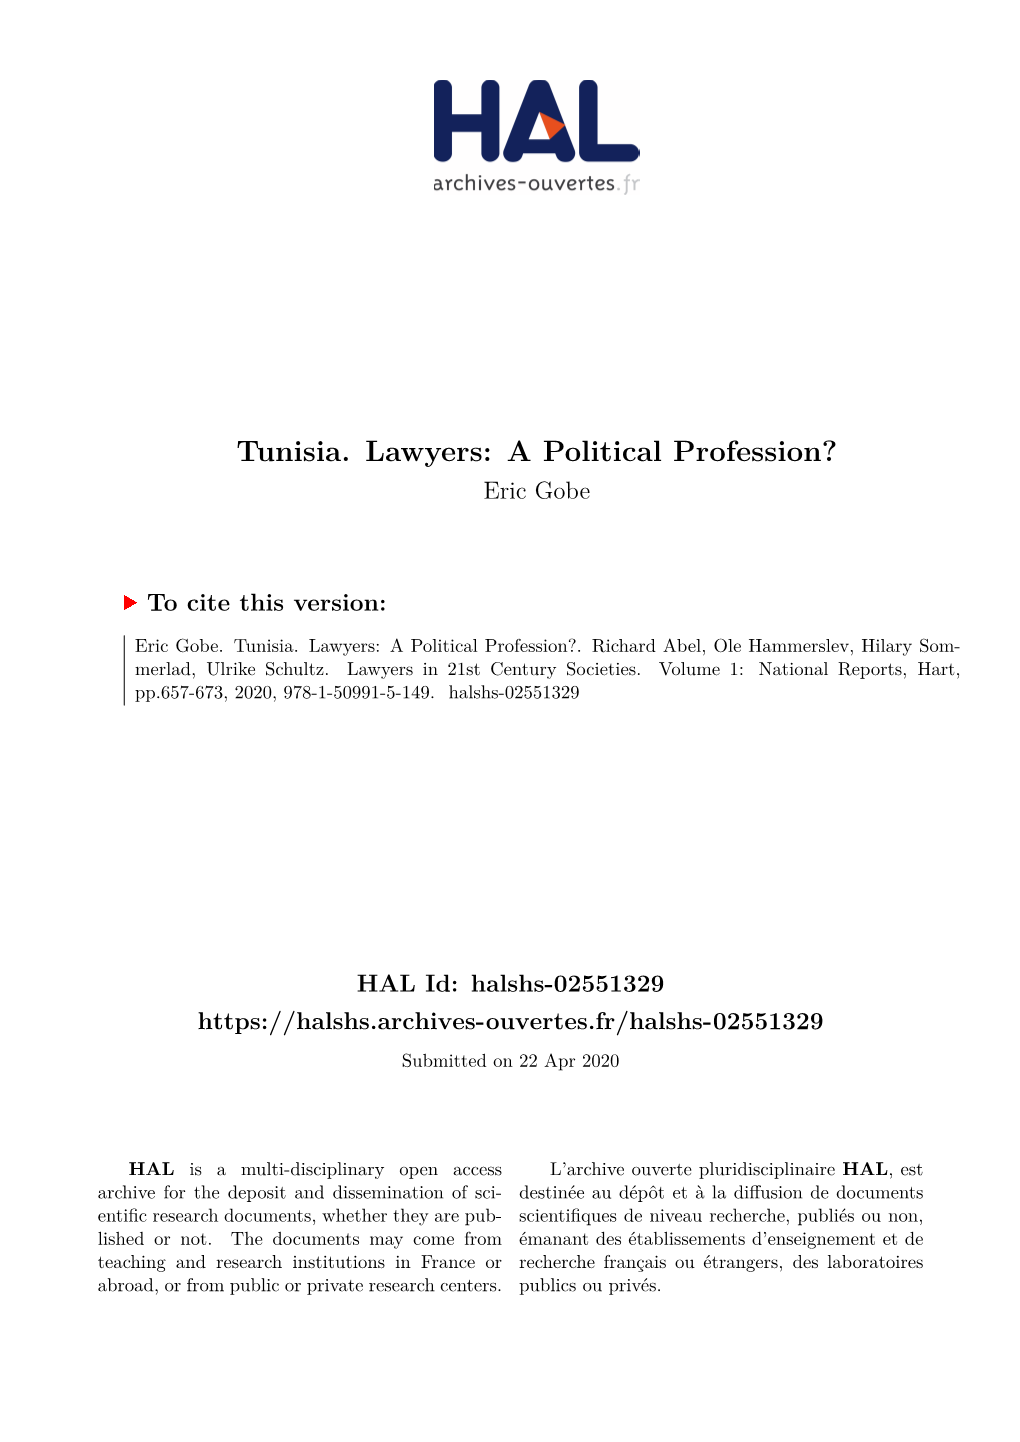 Tunisia. Lawyers: a Political Profession? Eric Gobe